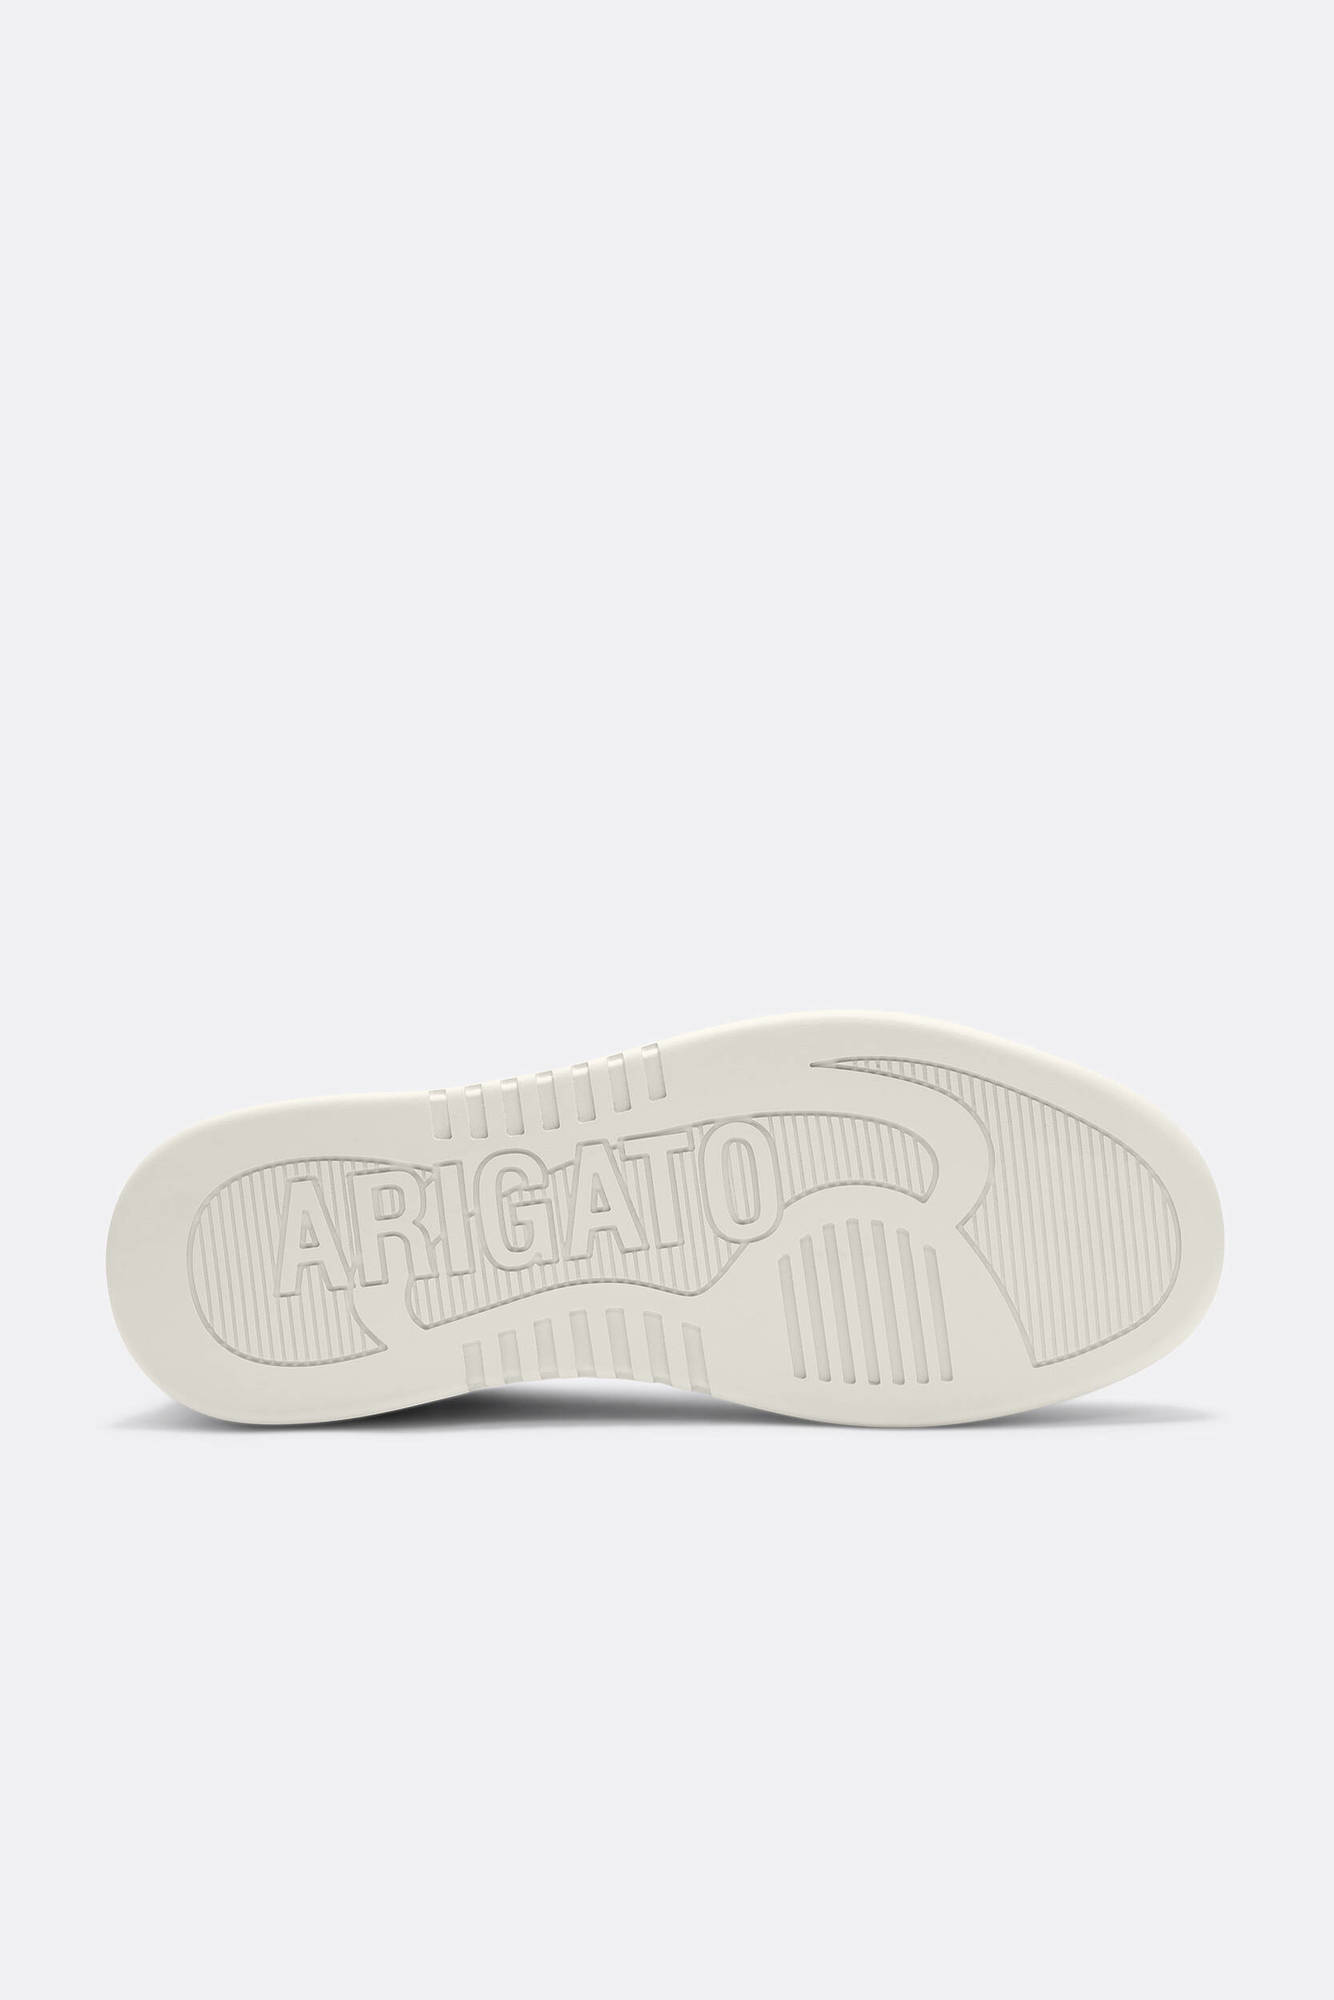 AXEL ARIGATO Dice Lo Sneaker in Beige/Light Grey 41